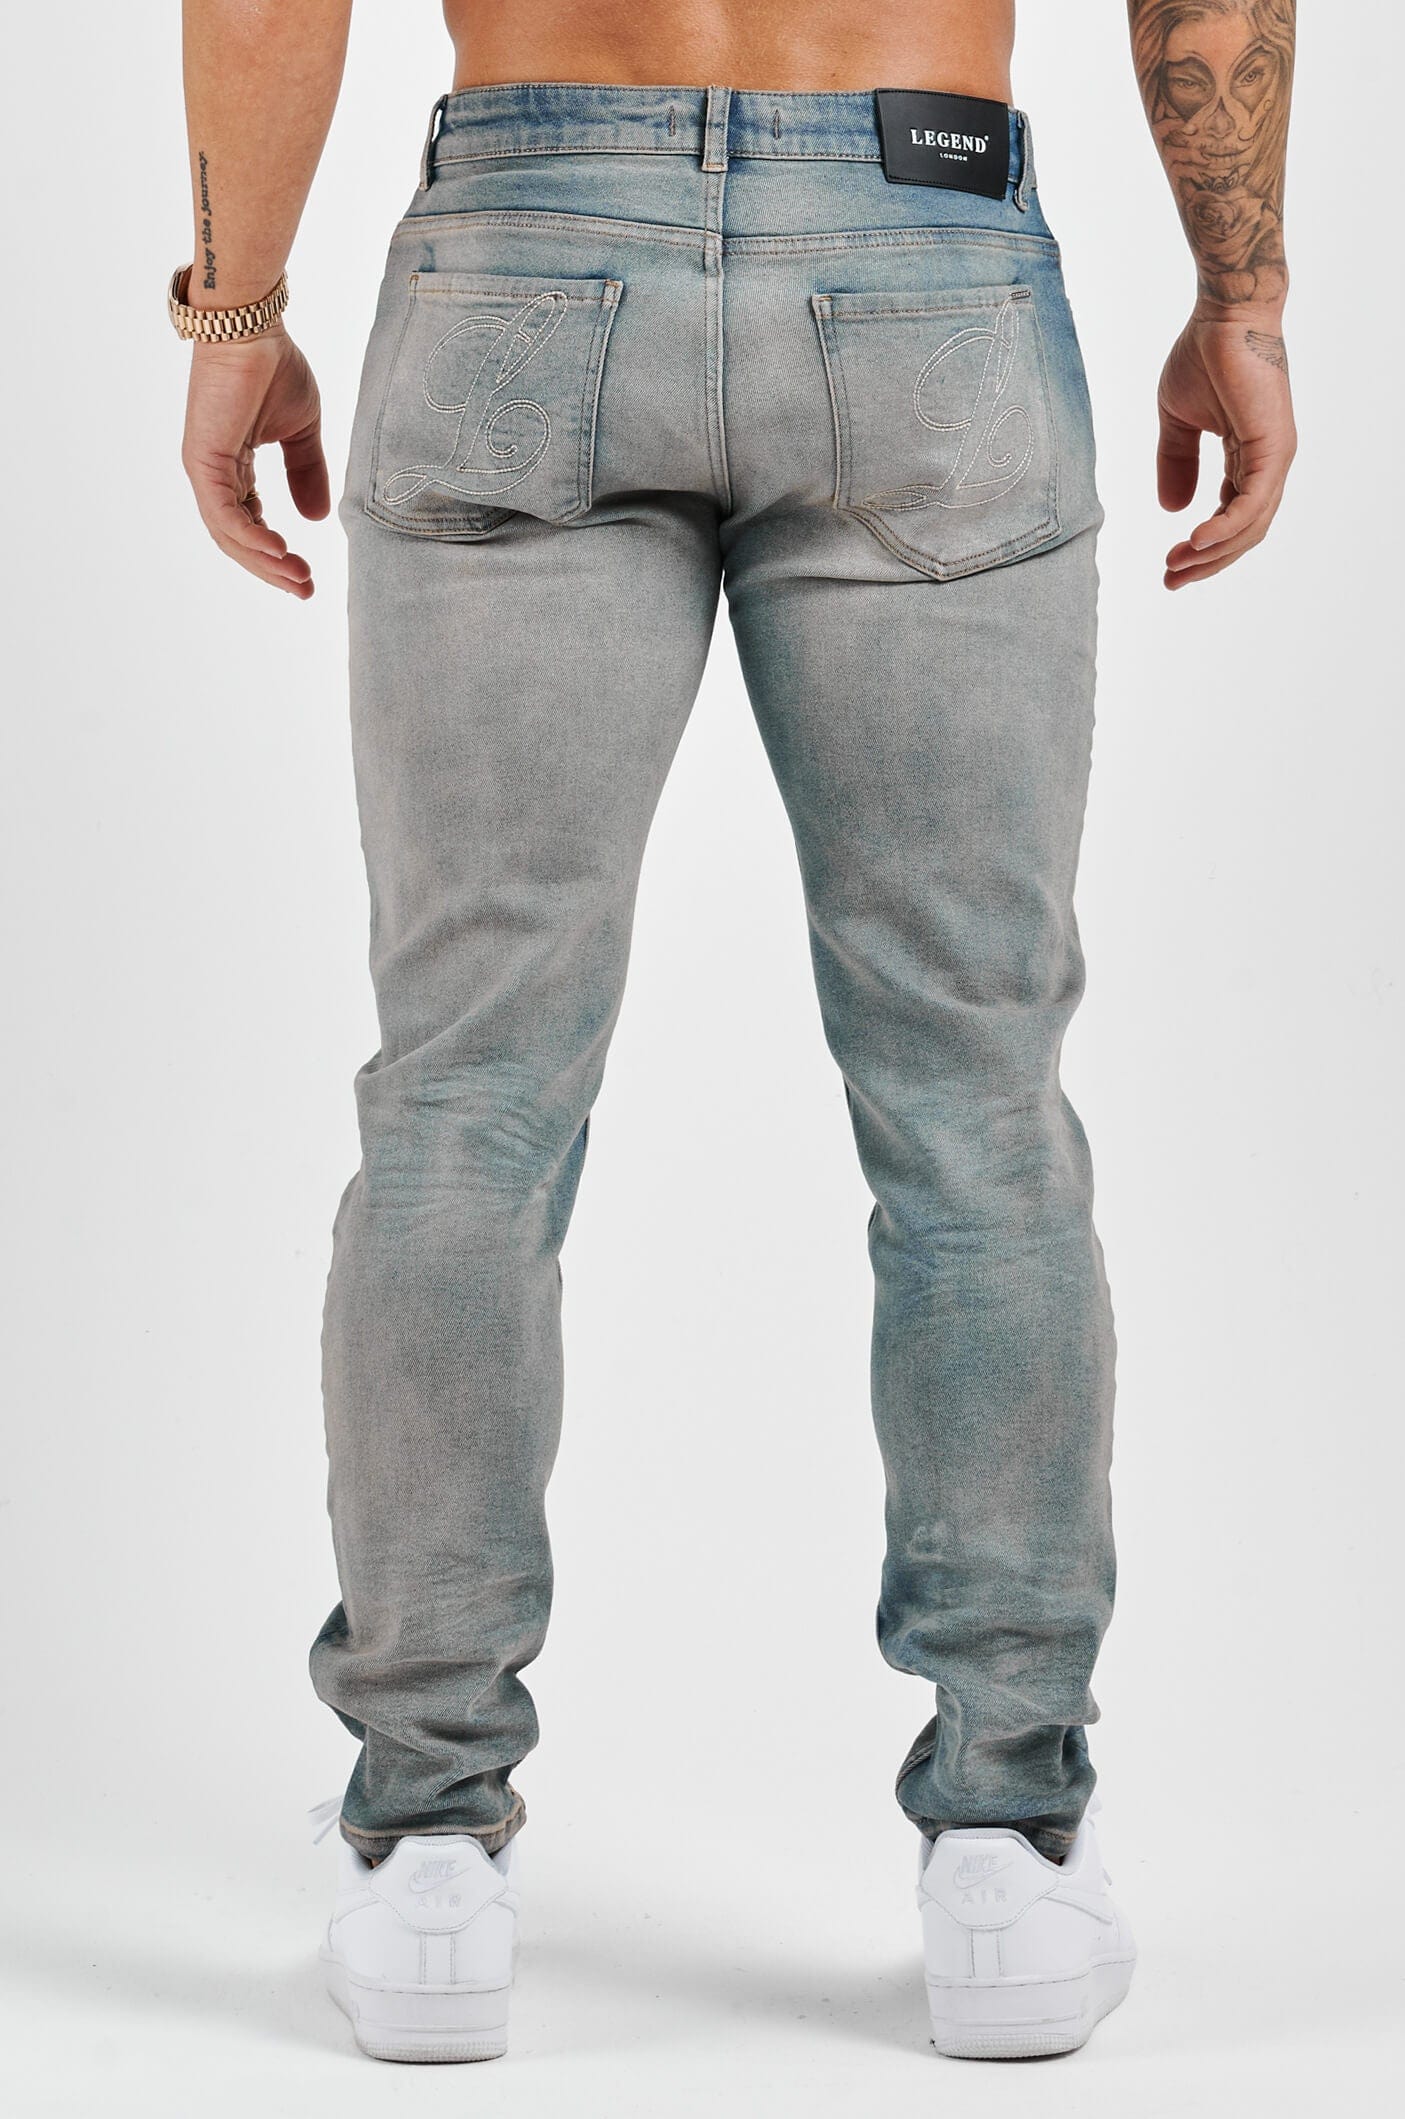 Legend London Jeans - slim 2.0 SLIM FIT JEANS 2.0 - STONE WASHED